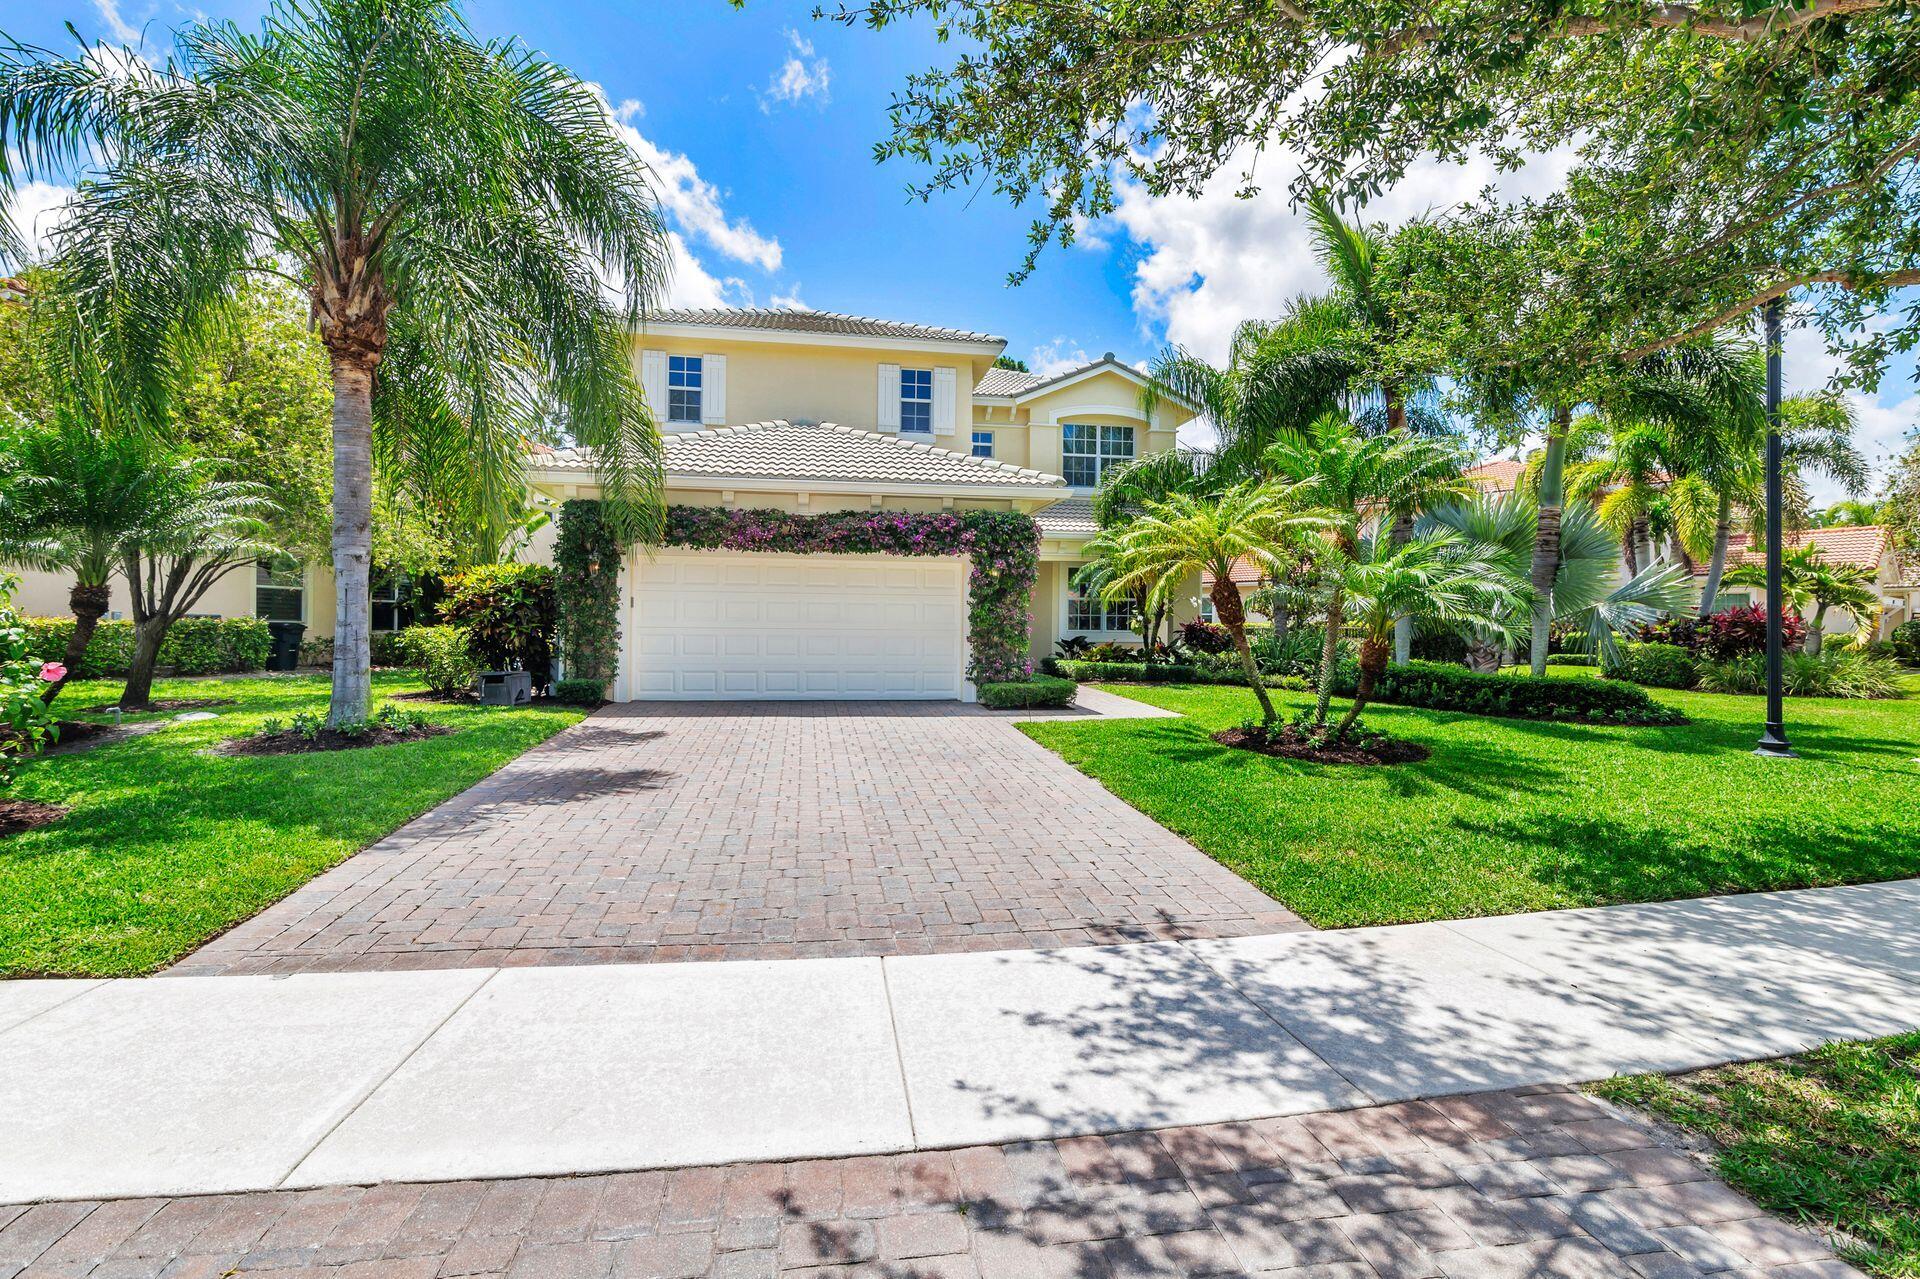 Rental Property at 12233 Aviles Circle, Palm Beach Gardens, Palm Beach County, Florida - Bedrooms: 4 
Bathrooms: 4.5  - $8,750 MO.